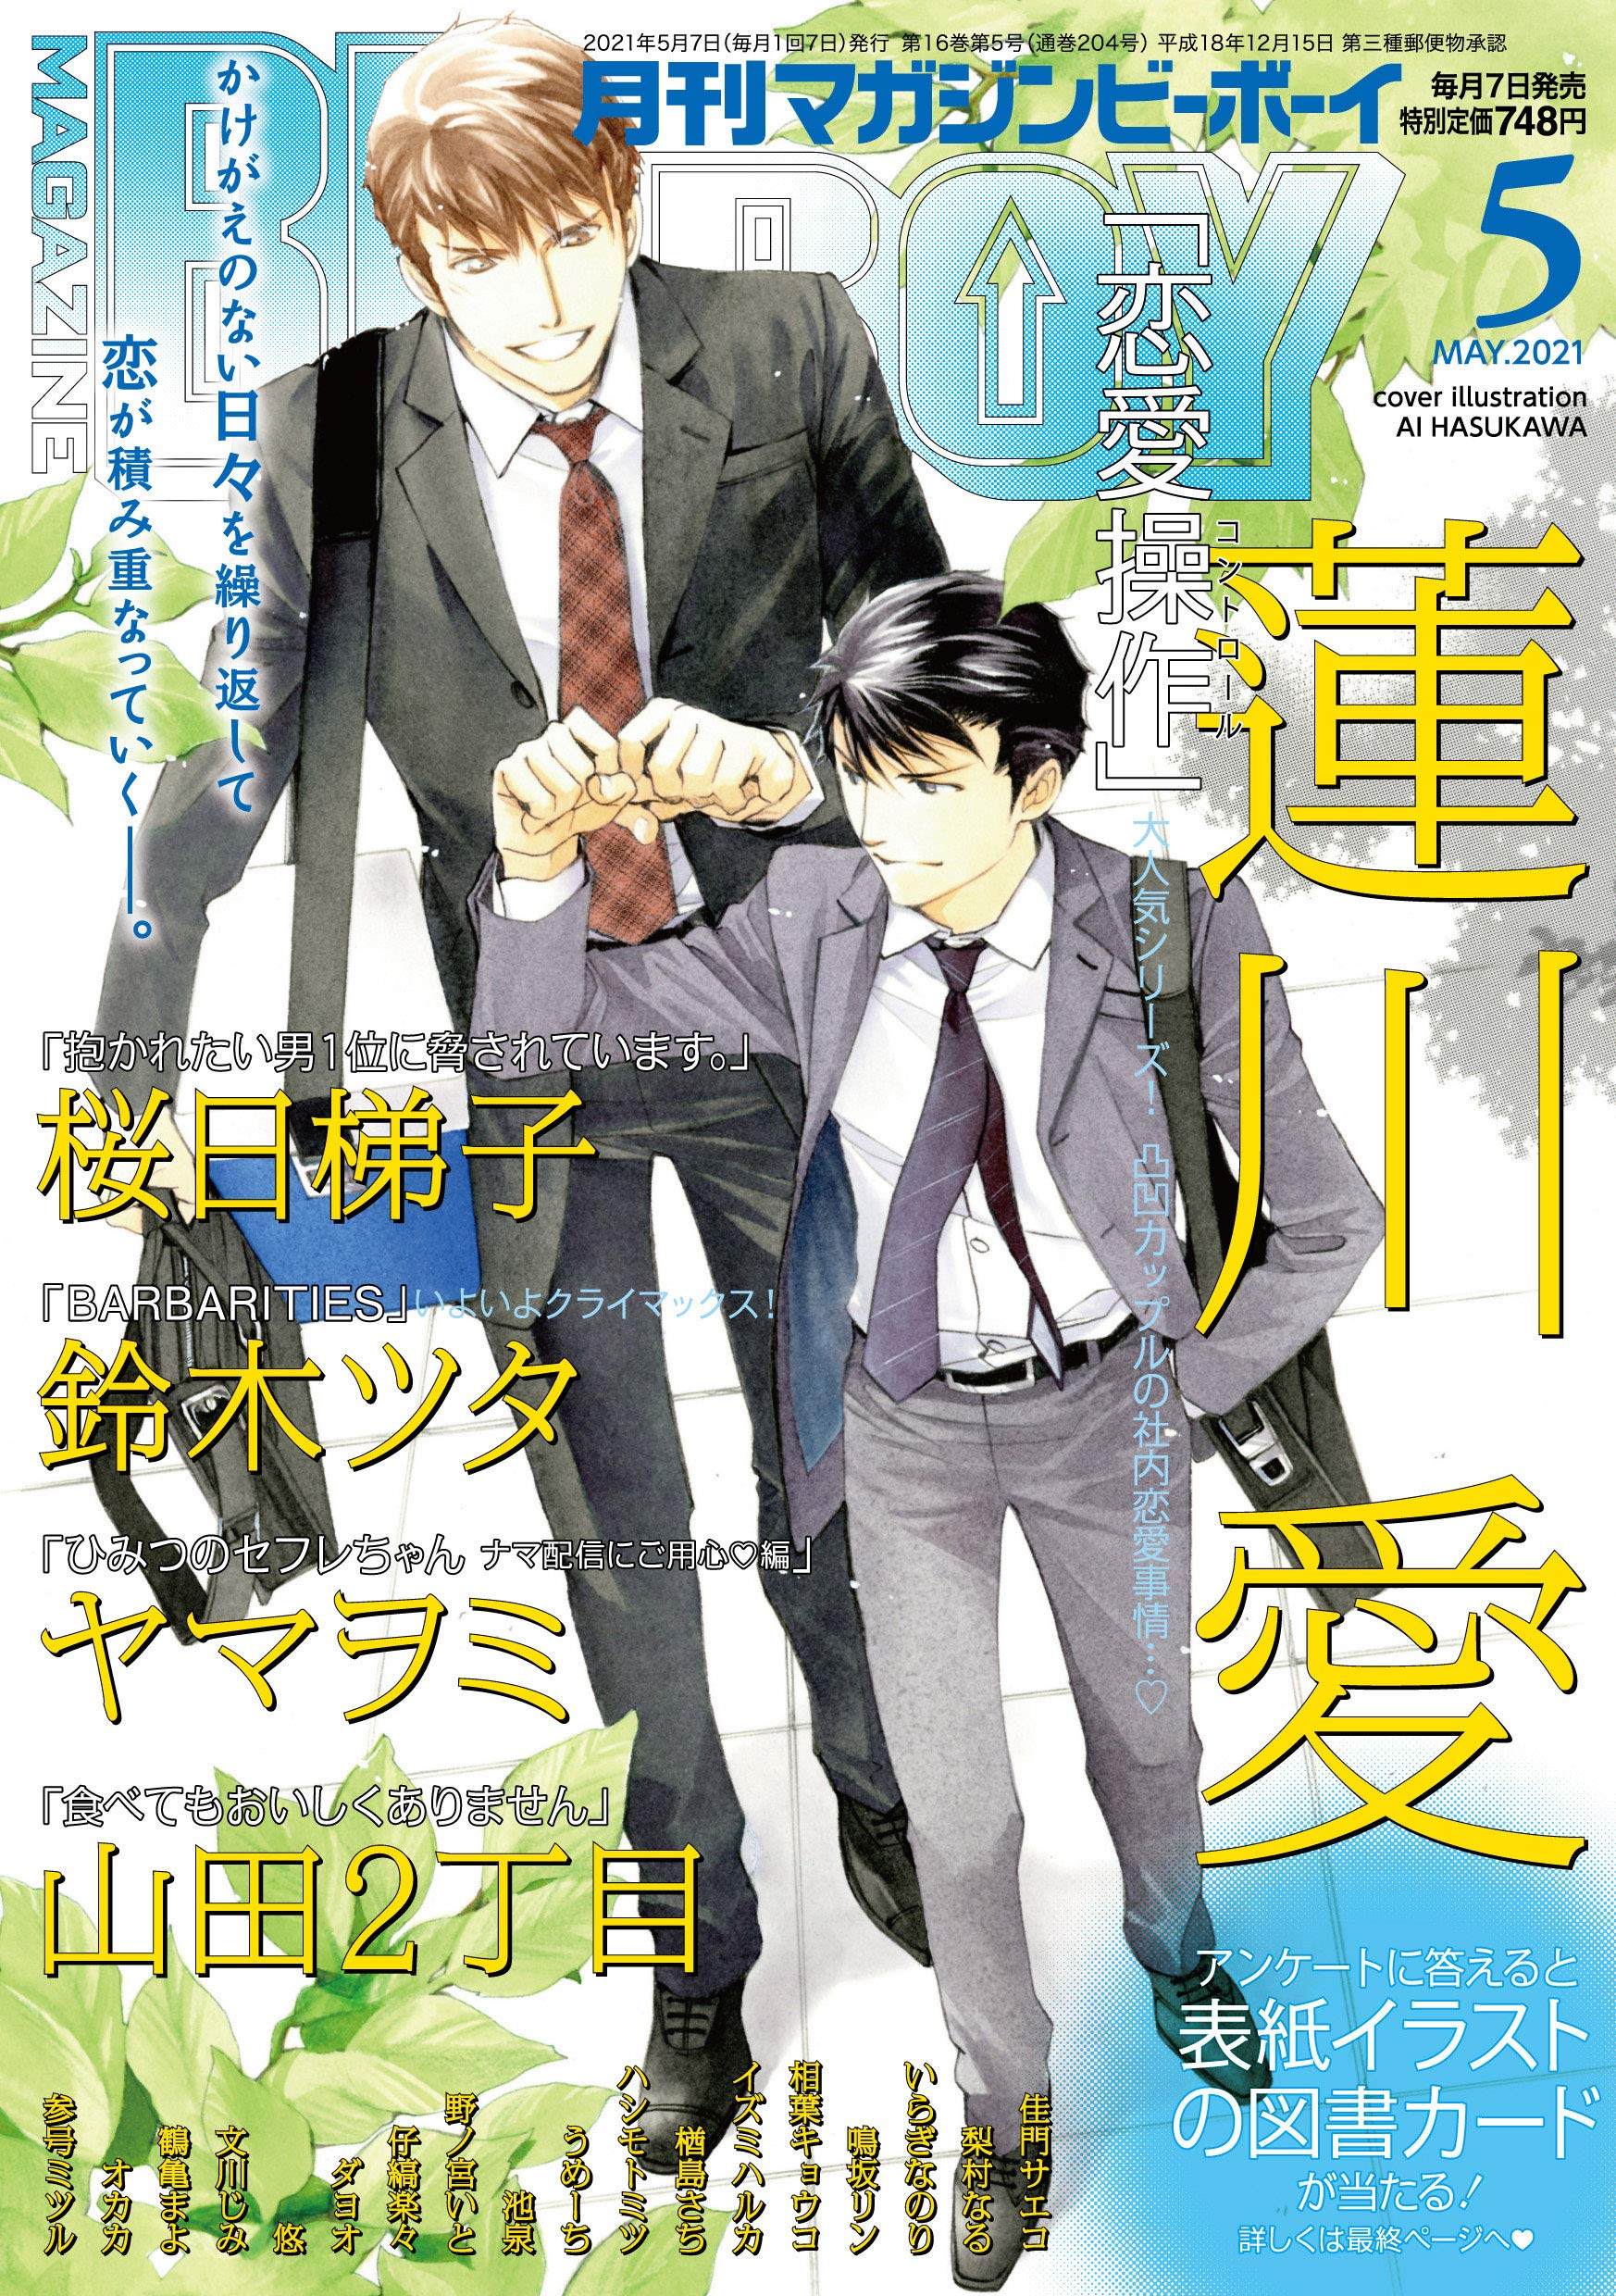 Boys Love (Yaoi) Comics - MAGAZINE BE×BOY (MAGAZINE BE×BOY(マガジンビーボーイ) 2021年05月号[雑誌]) / Hasukawa Ai & Suzuki Tsuta & Sakurabi Hashigo & 悠 & オカカ